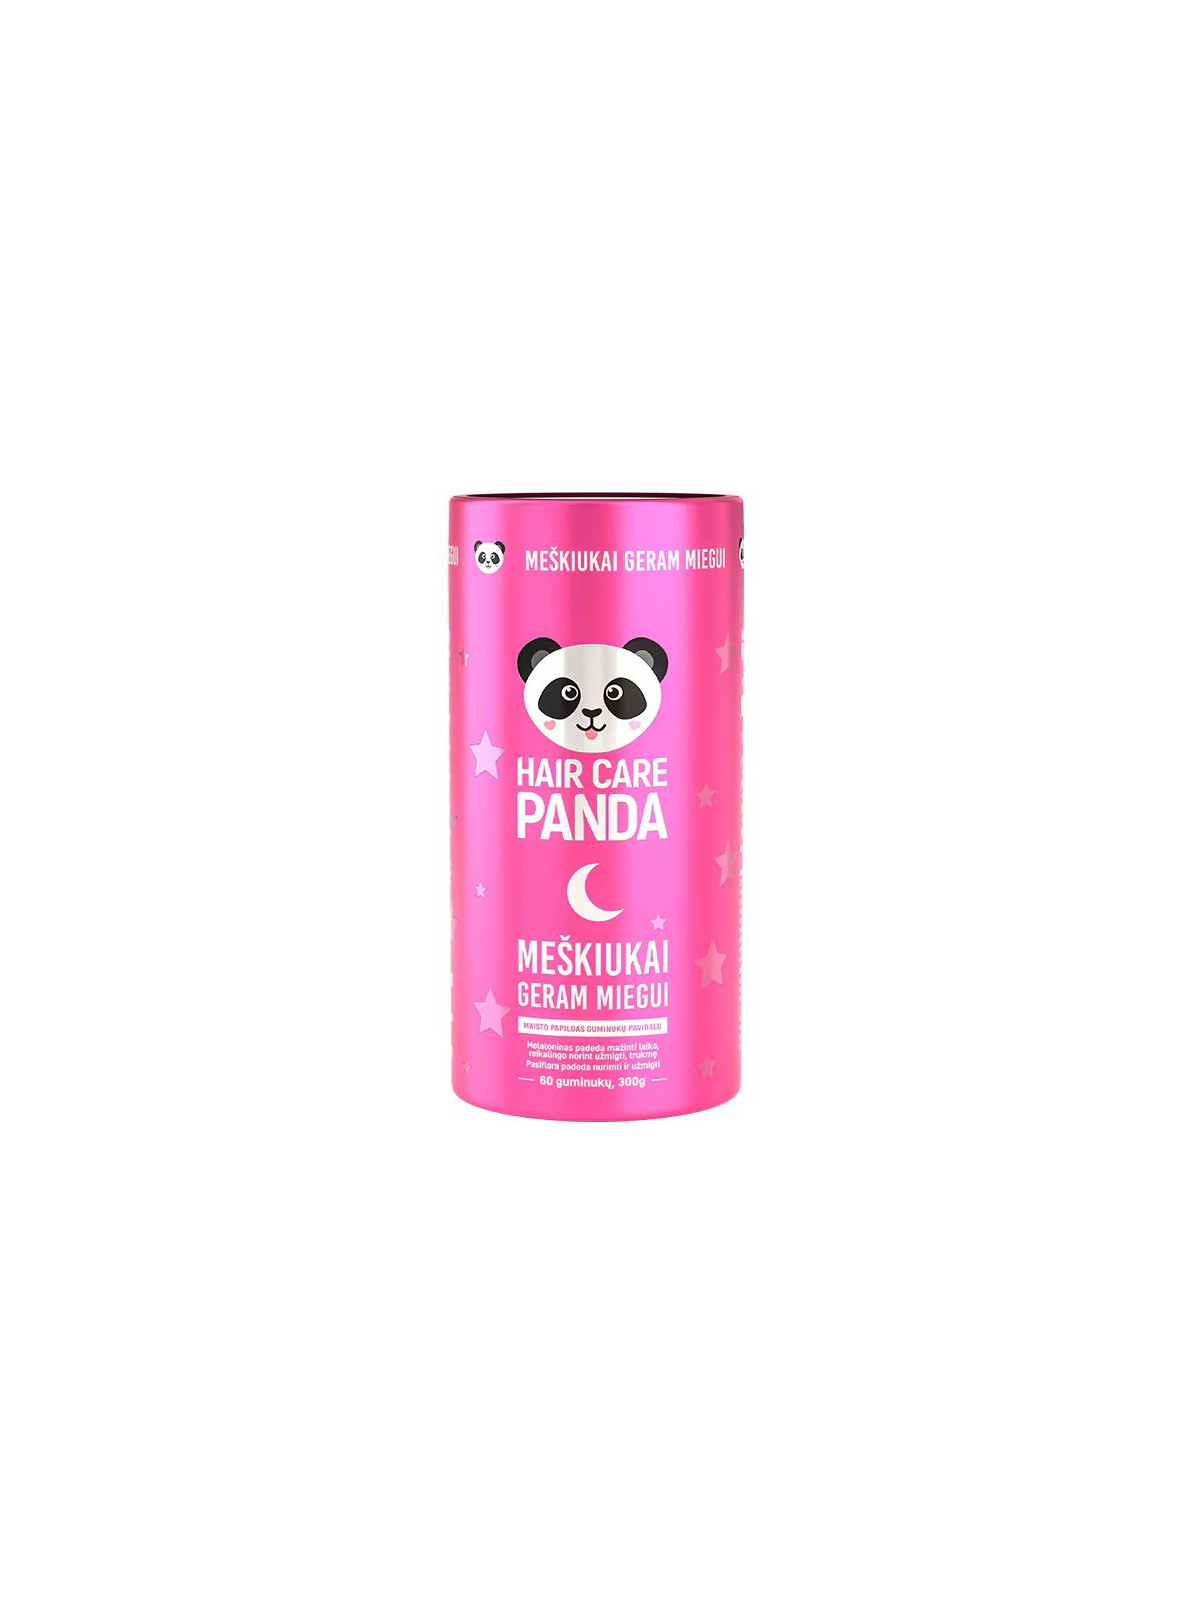 Hair Care Panda Maisto papildai geram miegui For Good Sleep Food Supplement